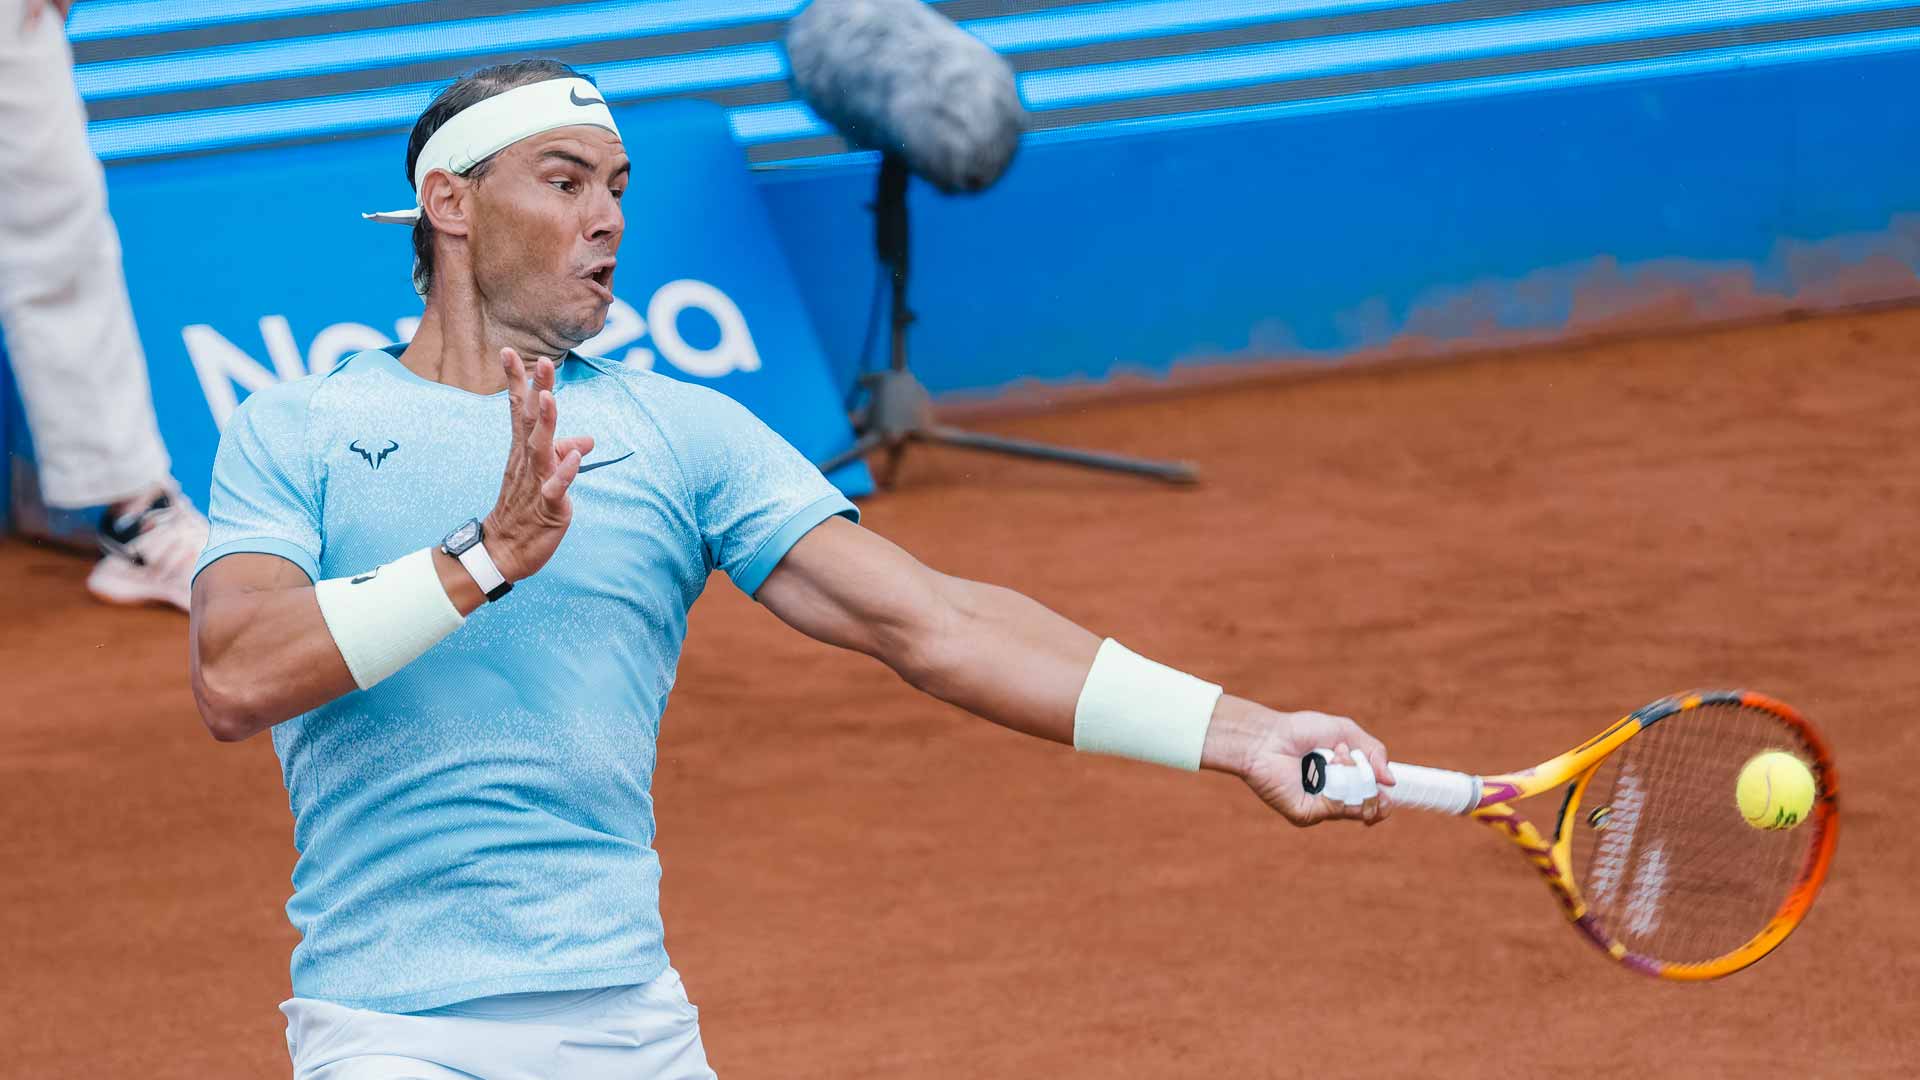 Nadal makes winning return vs. Borg in Bastad